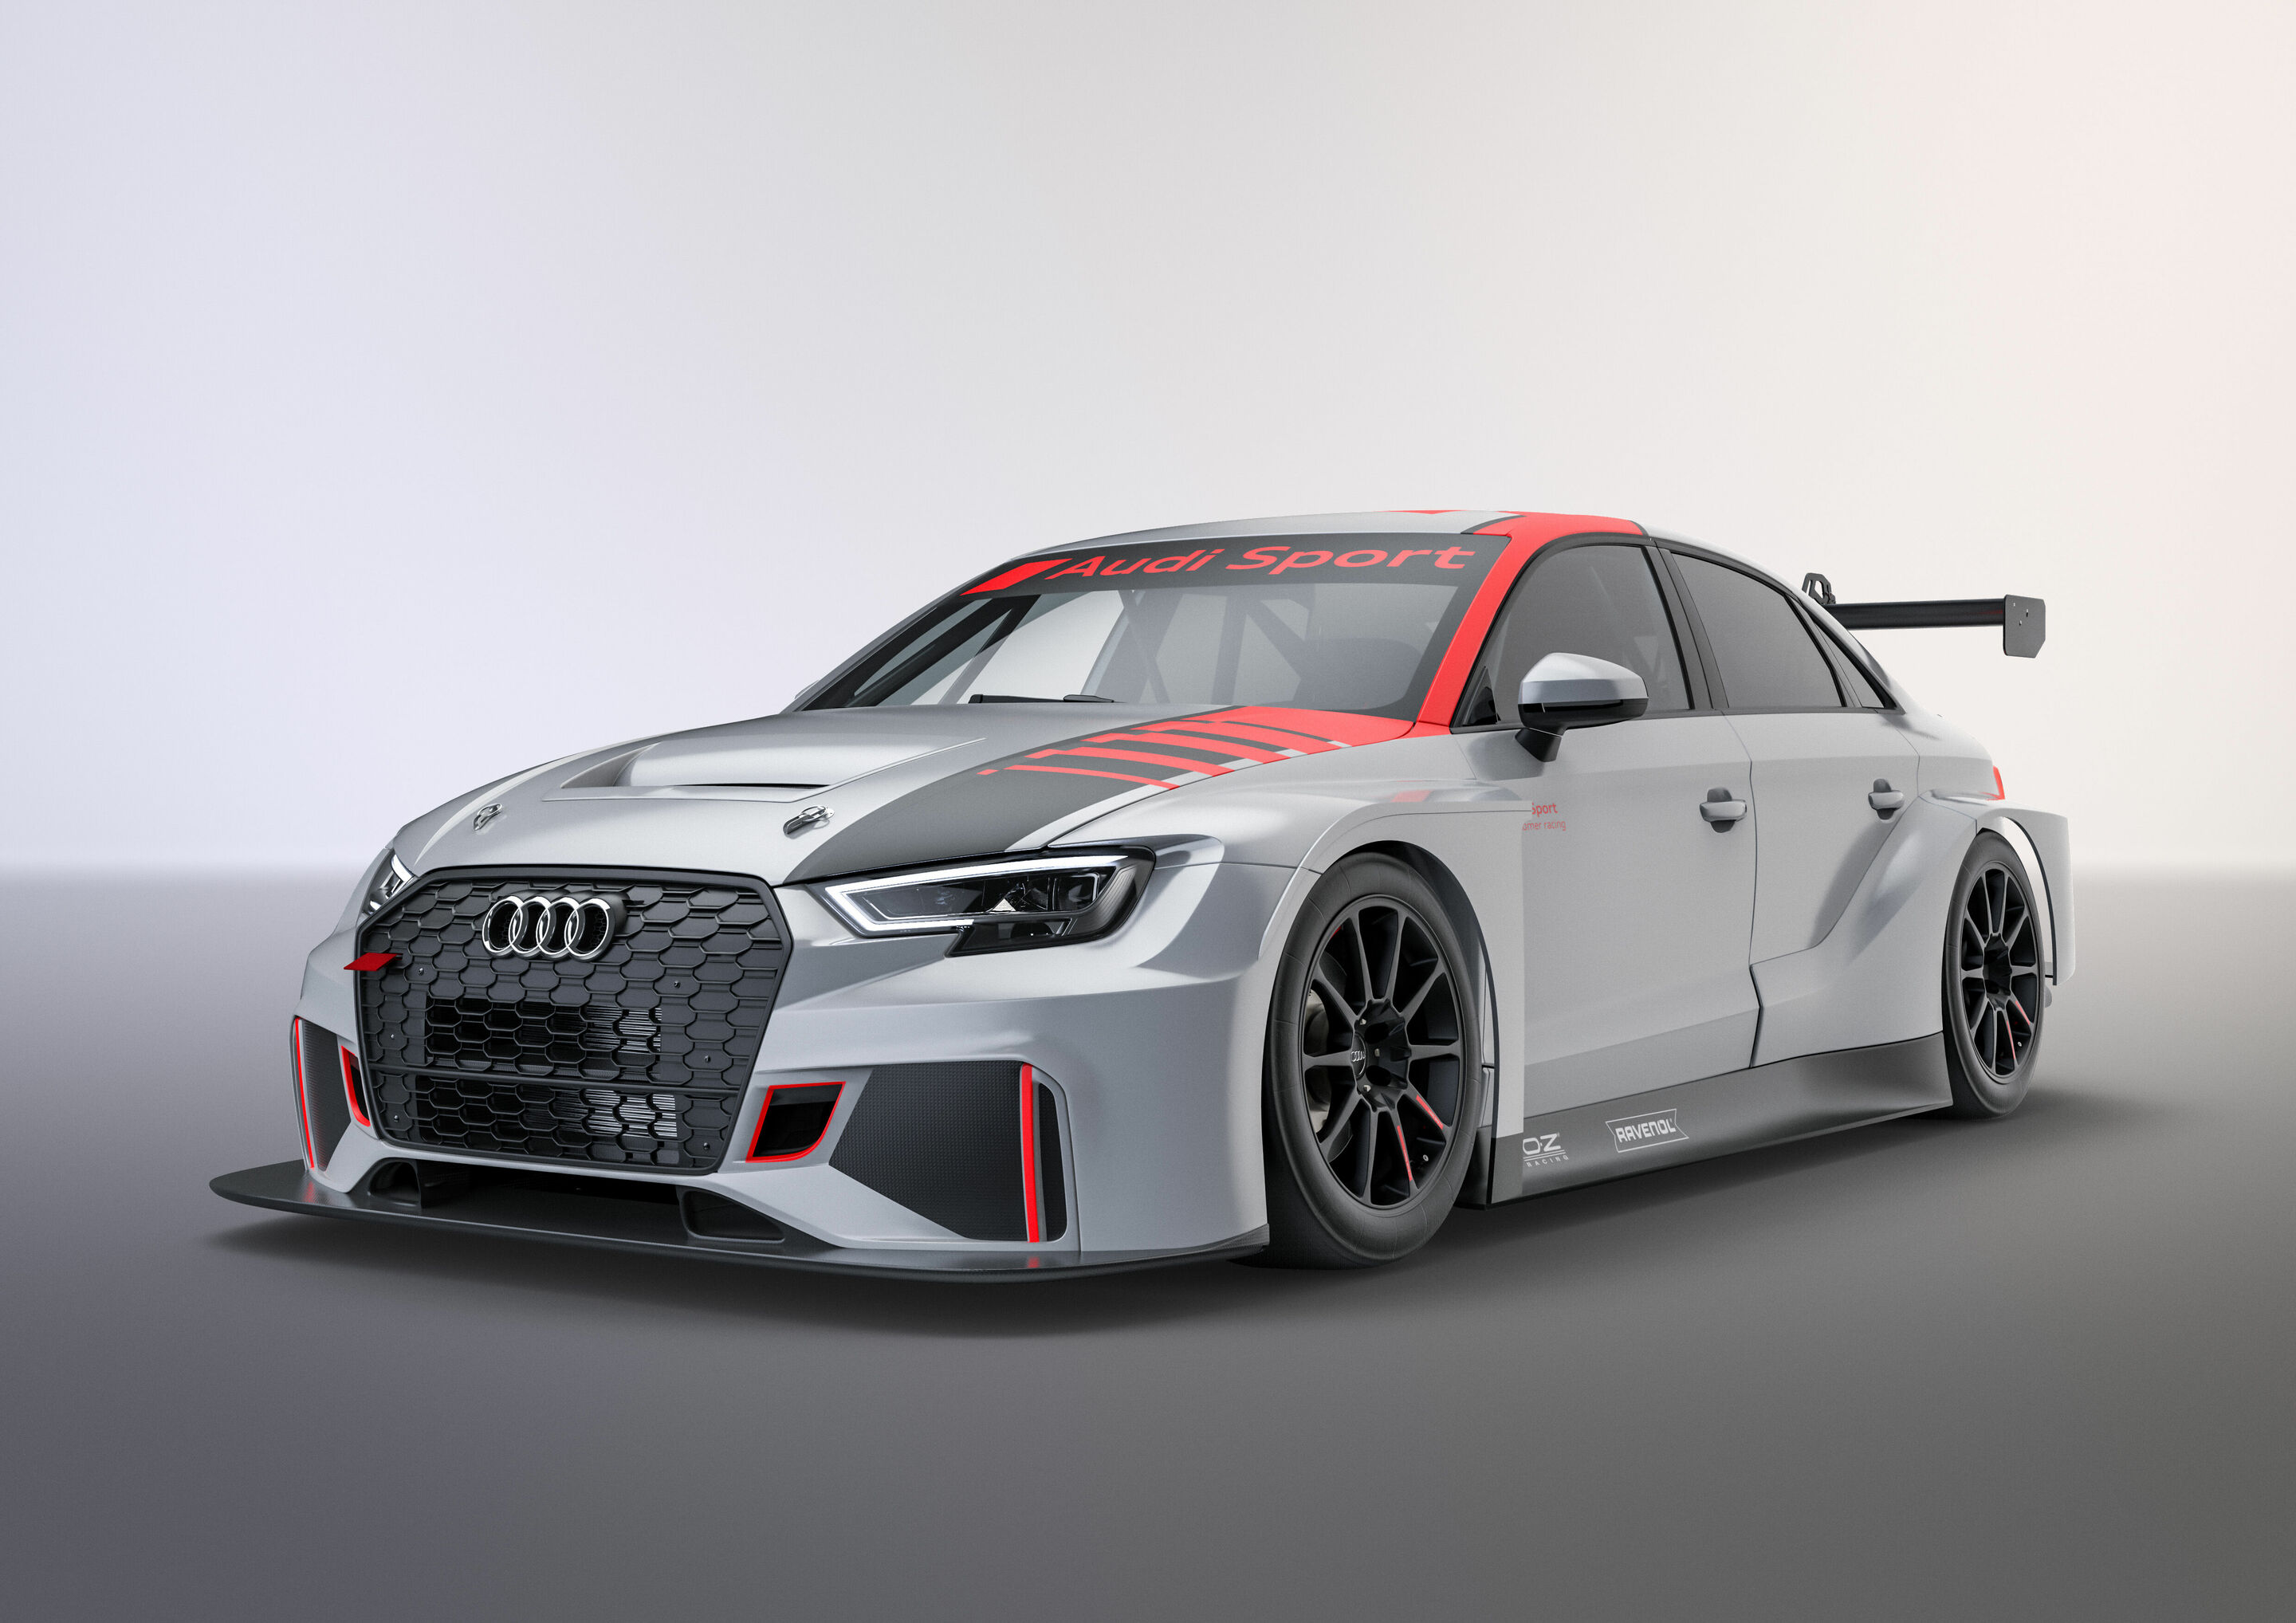 About Audi Sport